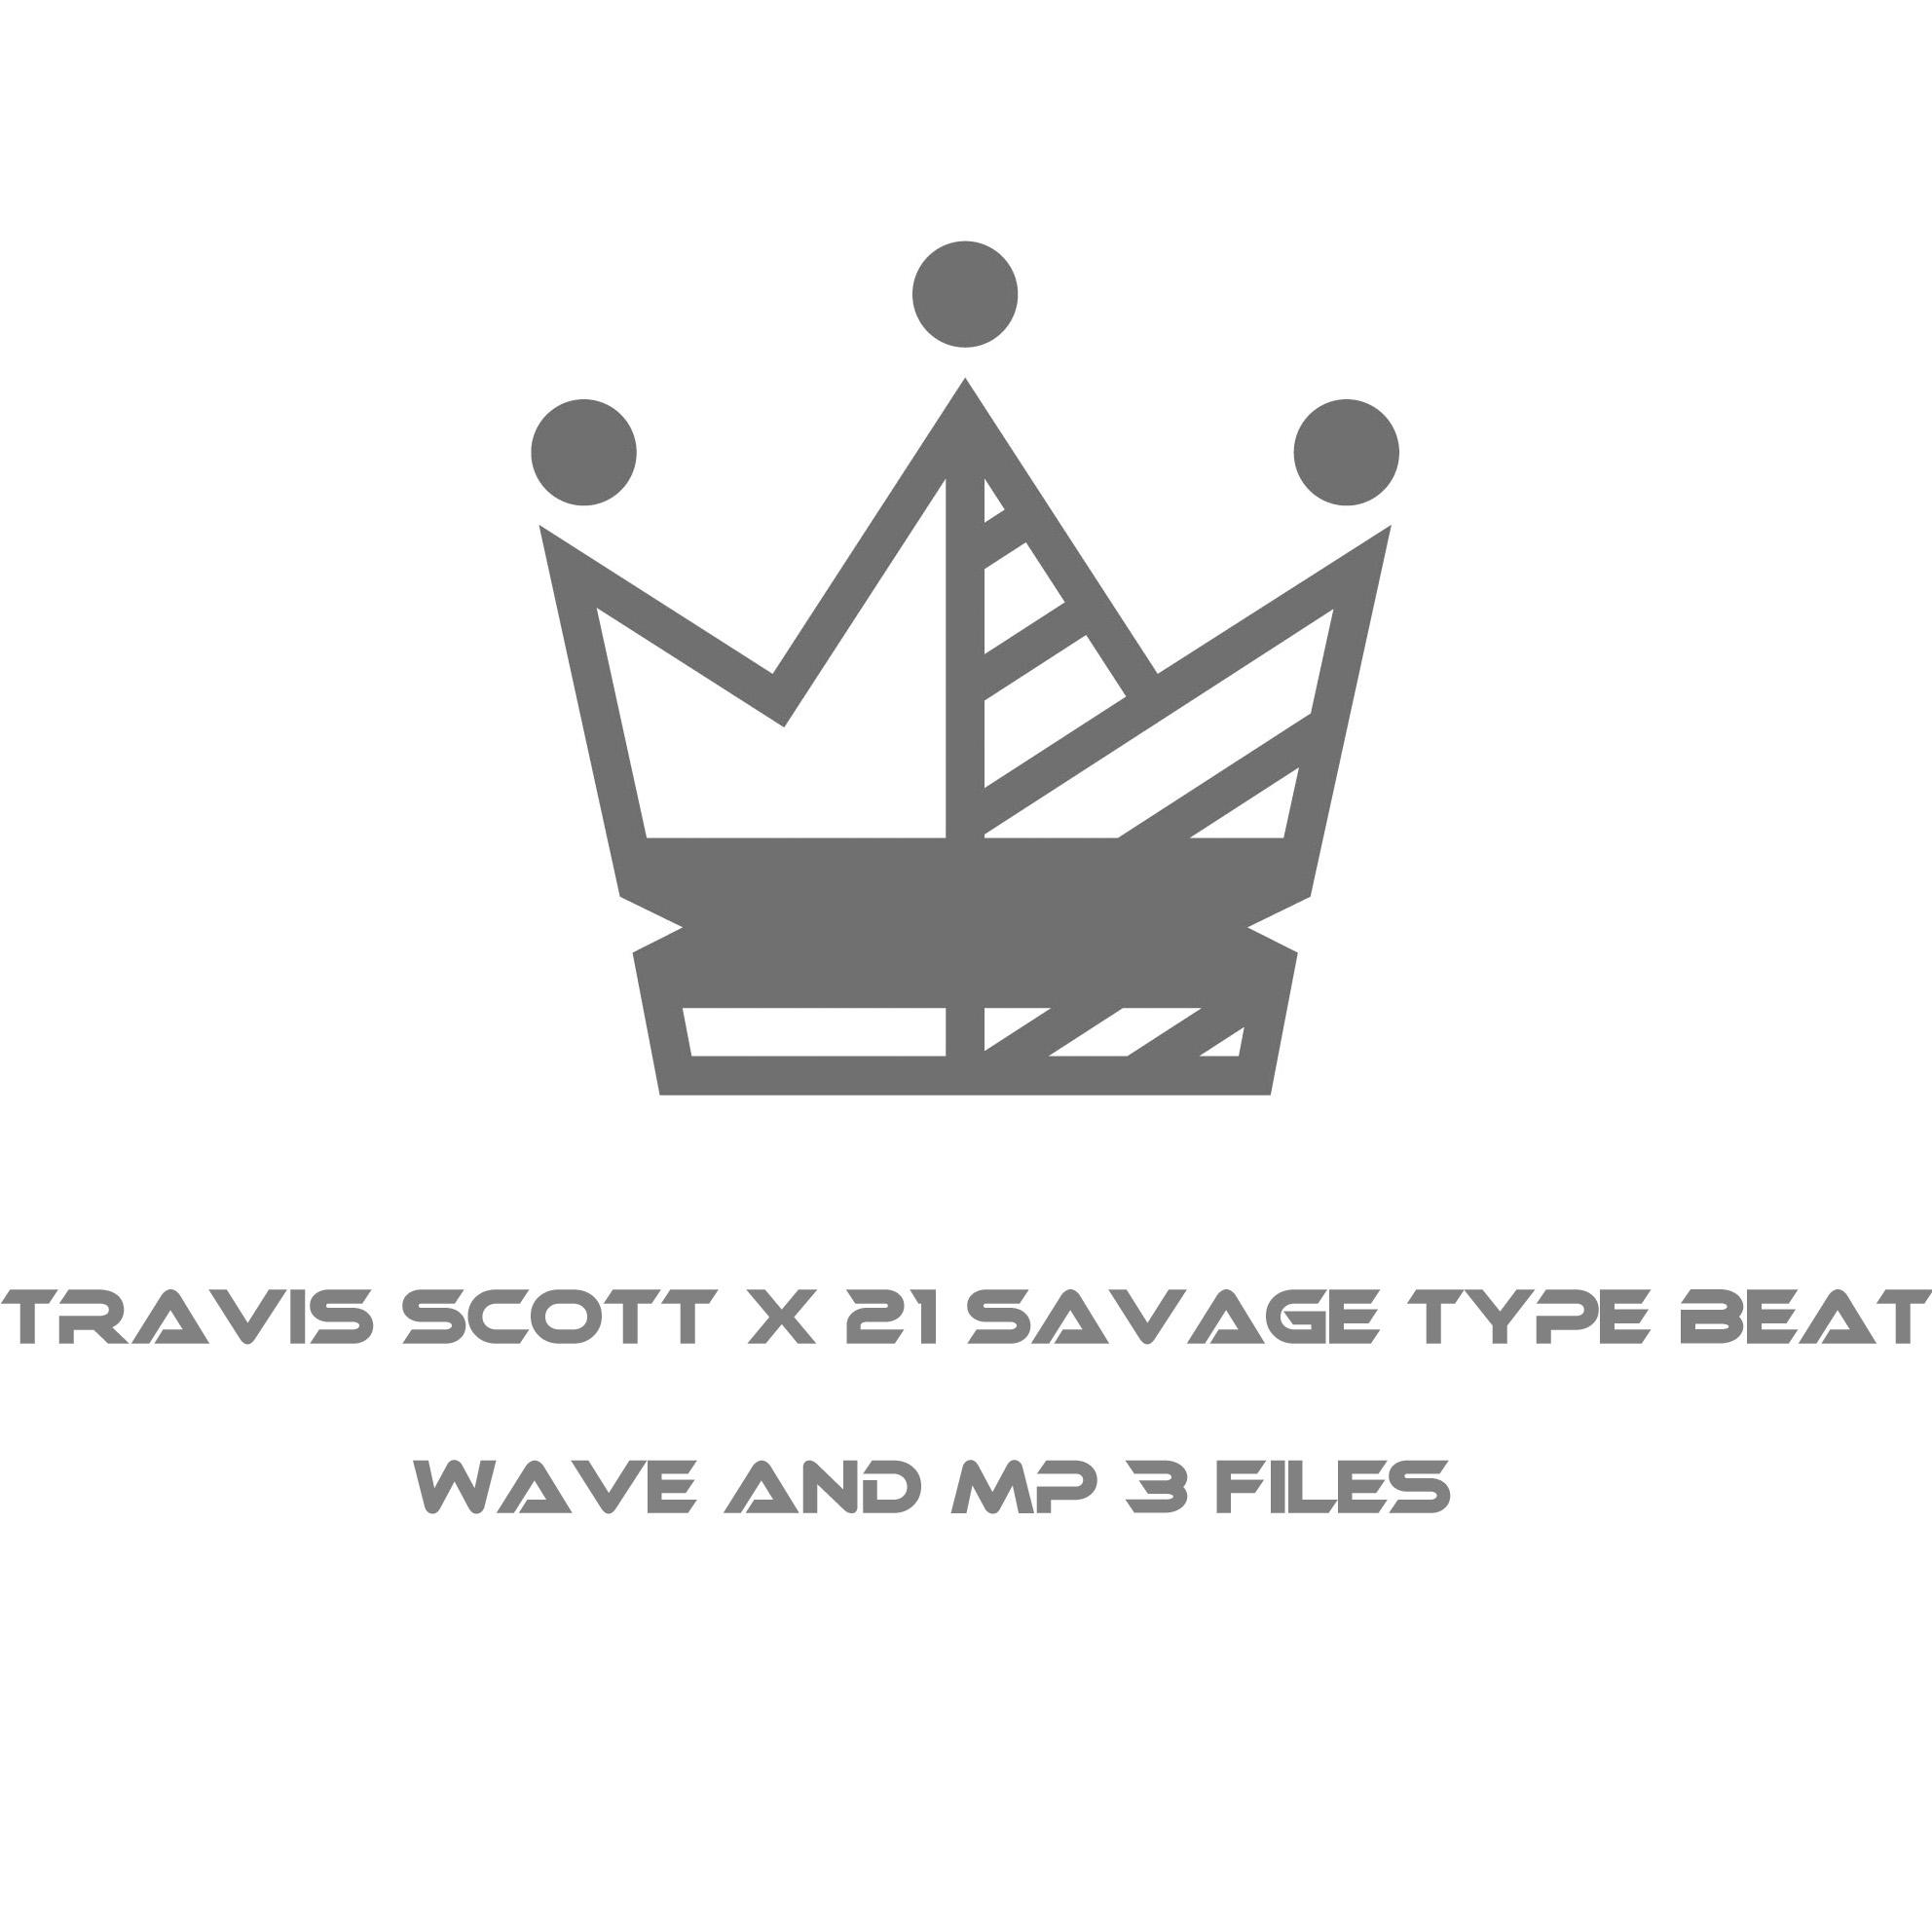 Savage Crown Logo - For Profit Use) Travis Scott X 21 Savage X 808 Mafia Type Beat